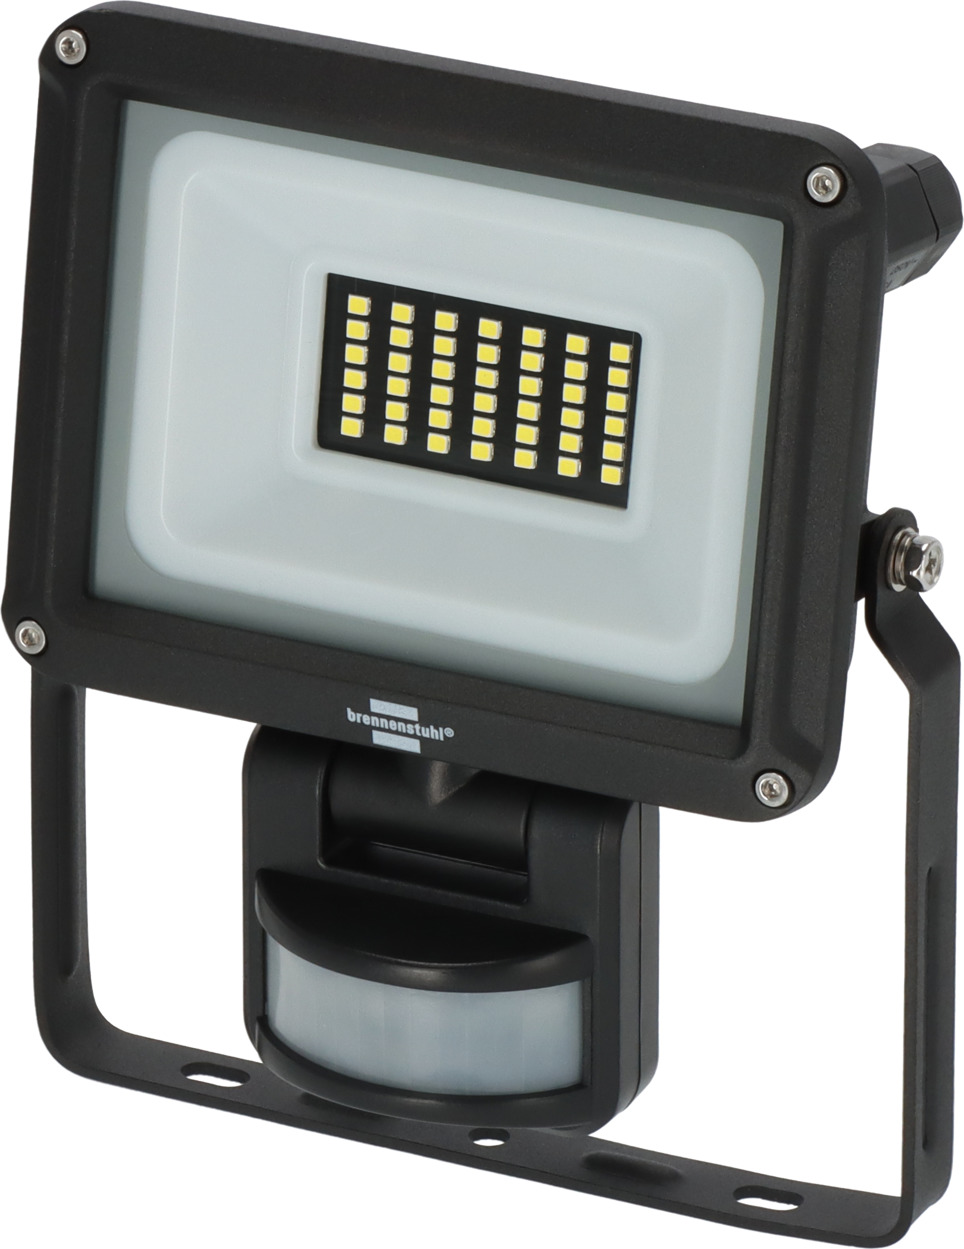 Picture of LED Strahler JARO 3060 P mit Infrarot-Bewegungsmelder, 2300lm, 20W, IP65